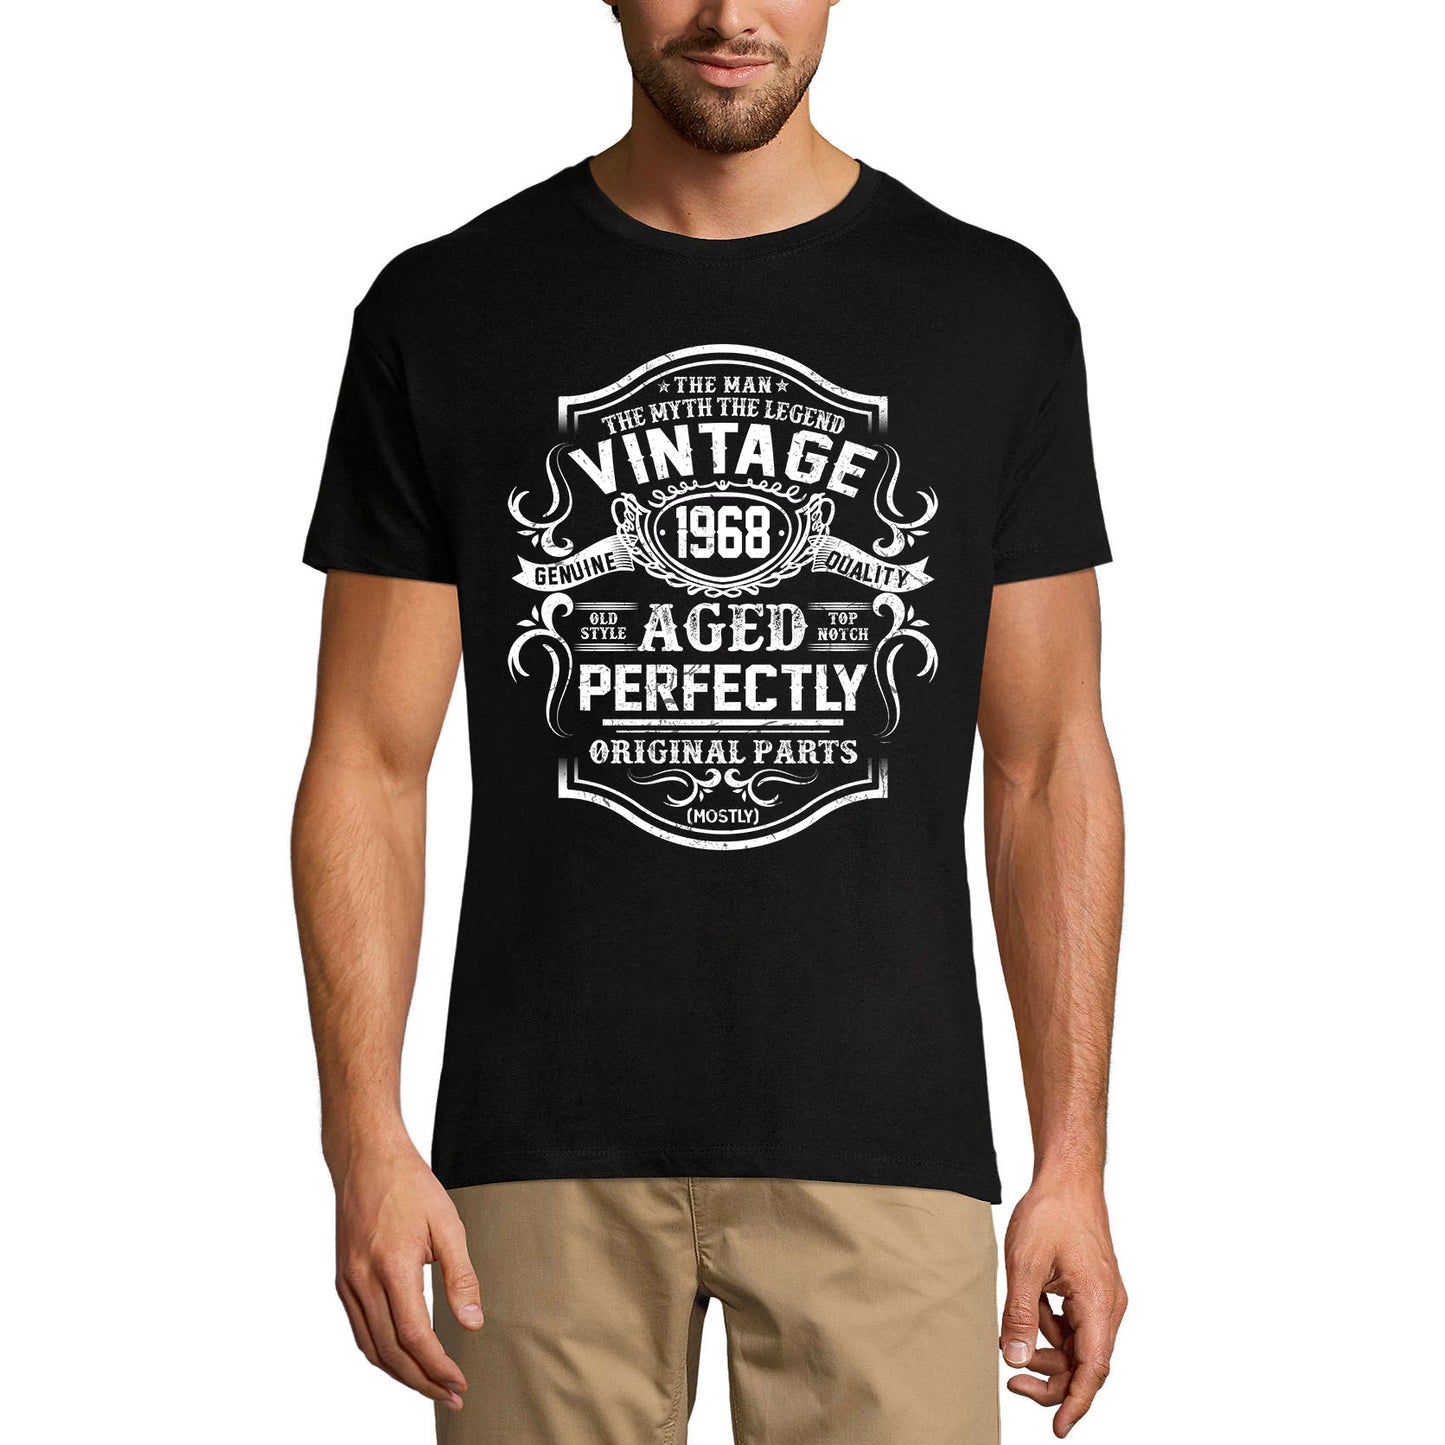 ULTRABASIC Men's T-Shirt Vintage 1968 Aged Perfectly - The Man Myth Legend - 52nd Birthday Tee Shirt